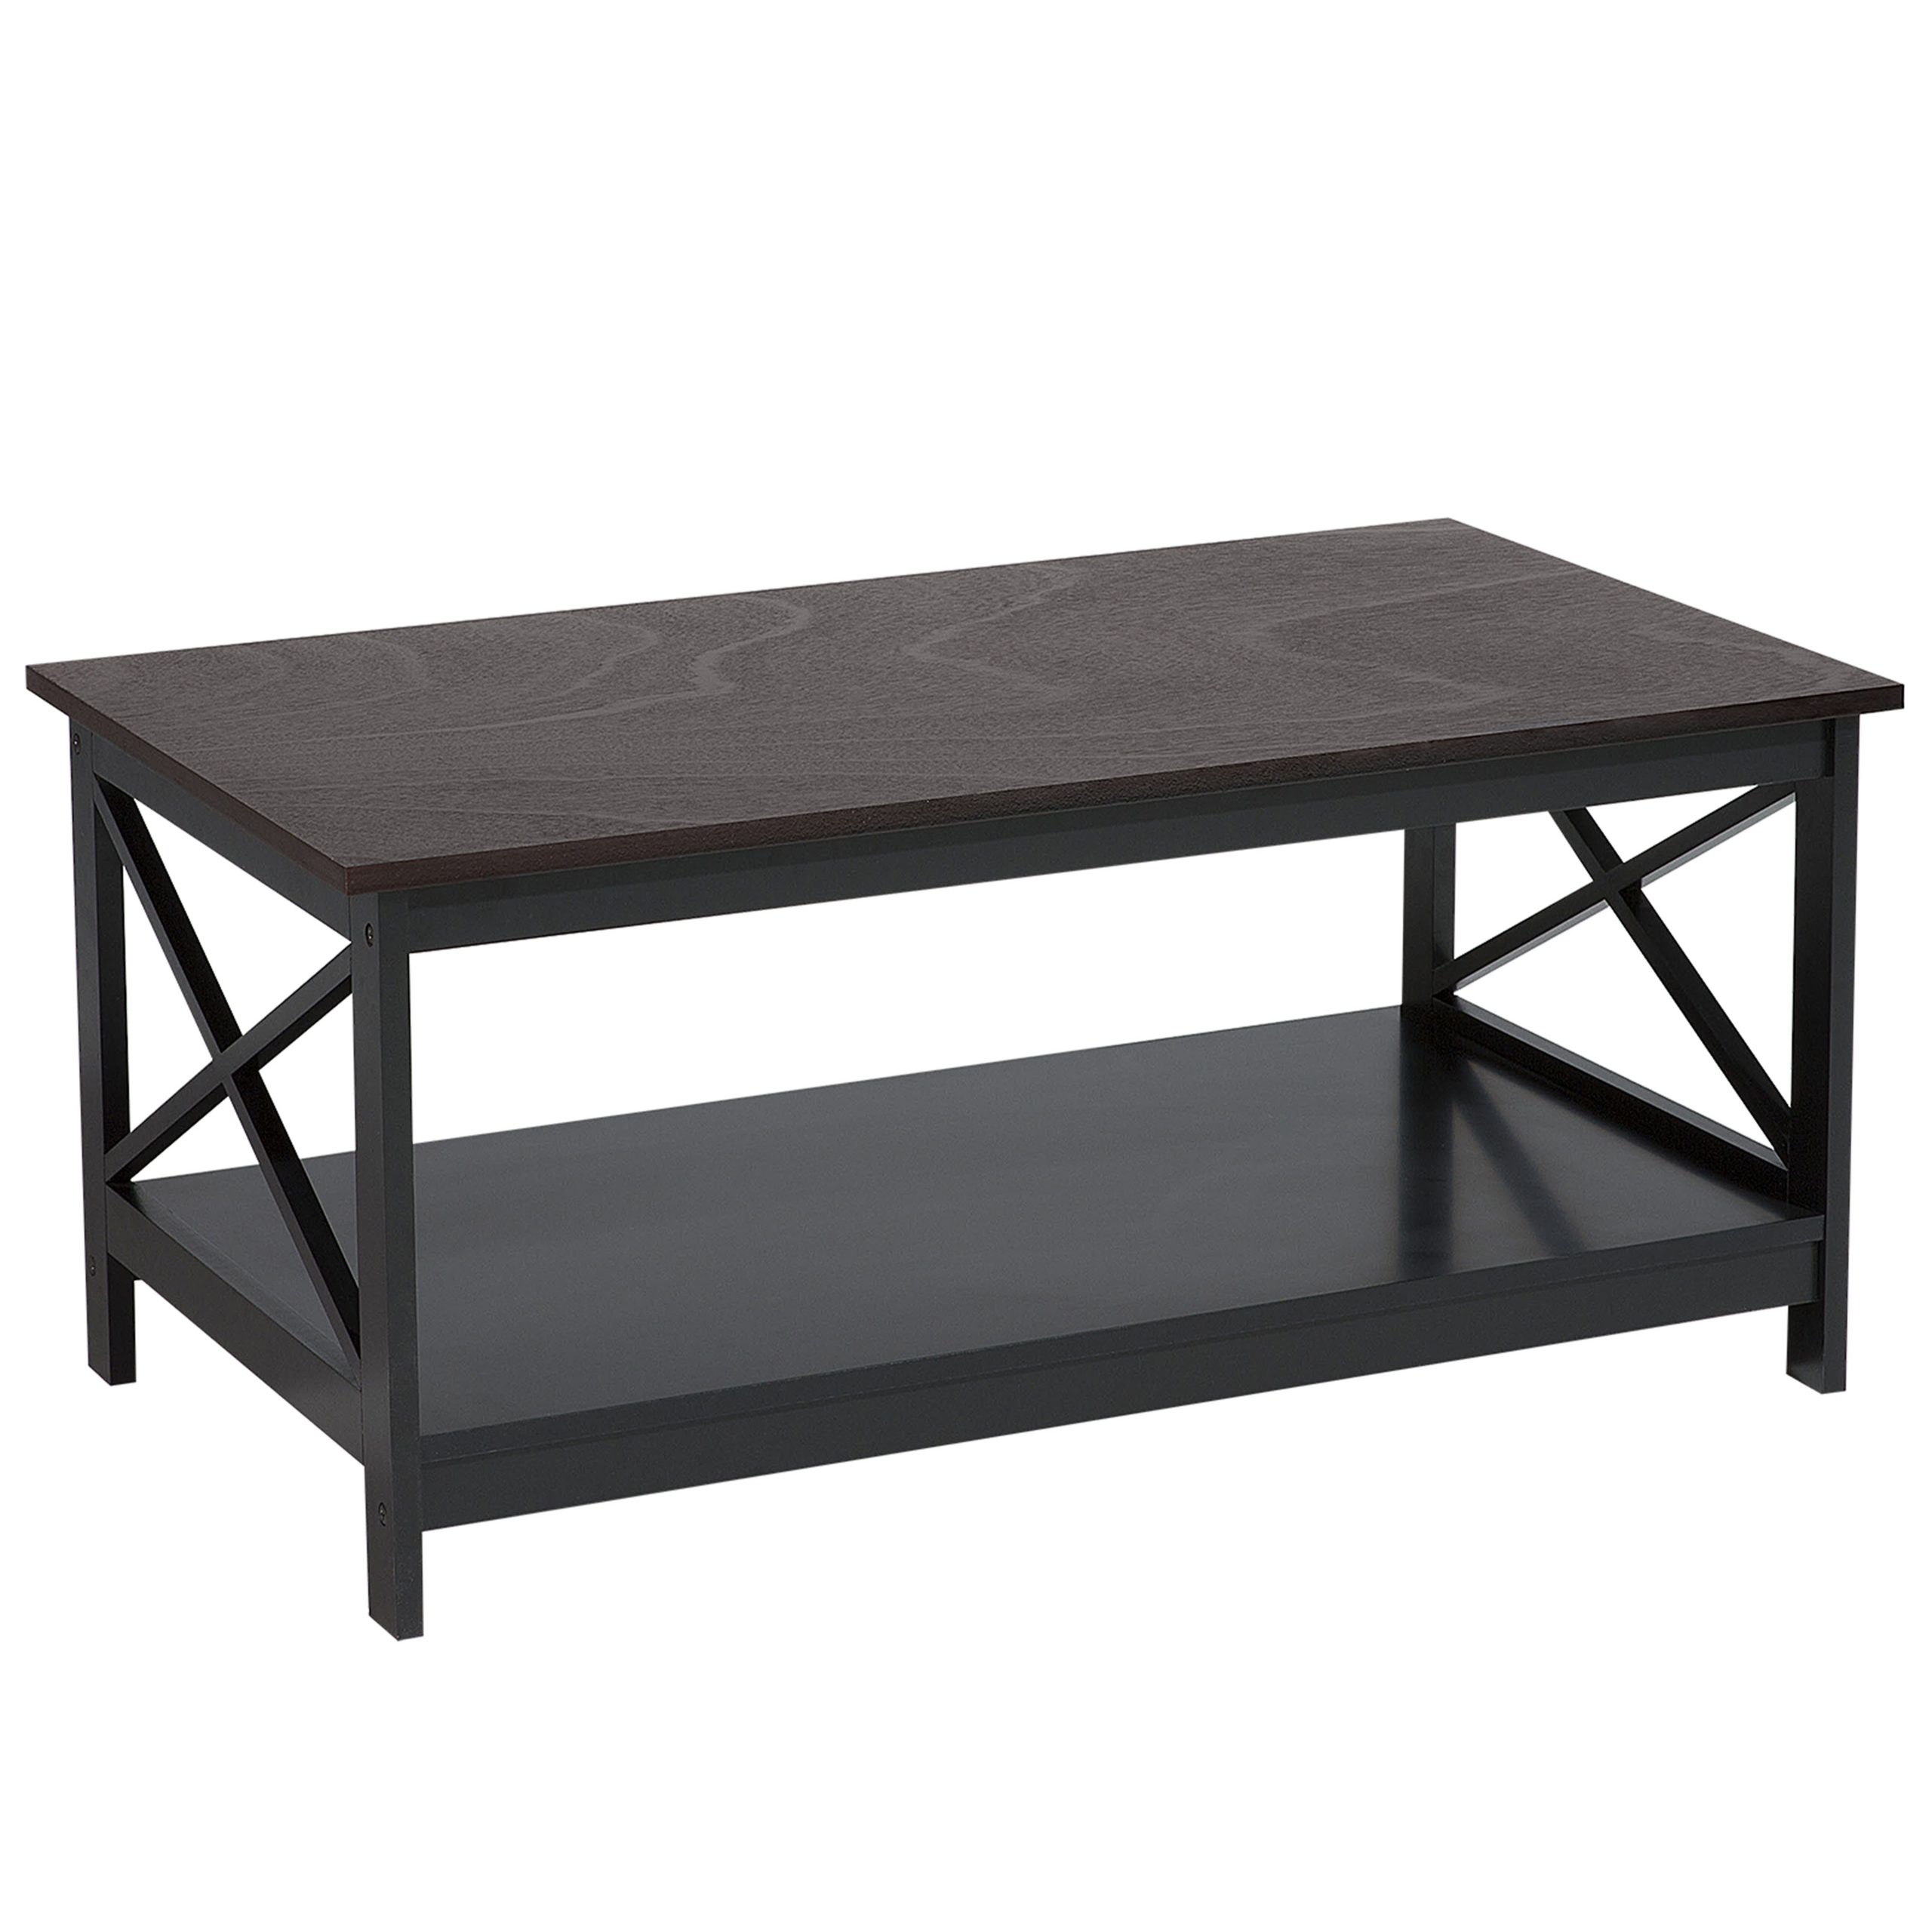 Beliani Coffee Table Black 100 x 55 cm 2 Tier Rectangular Tabletop Modern Style